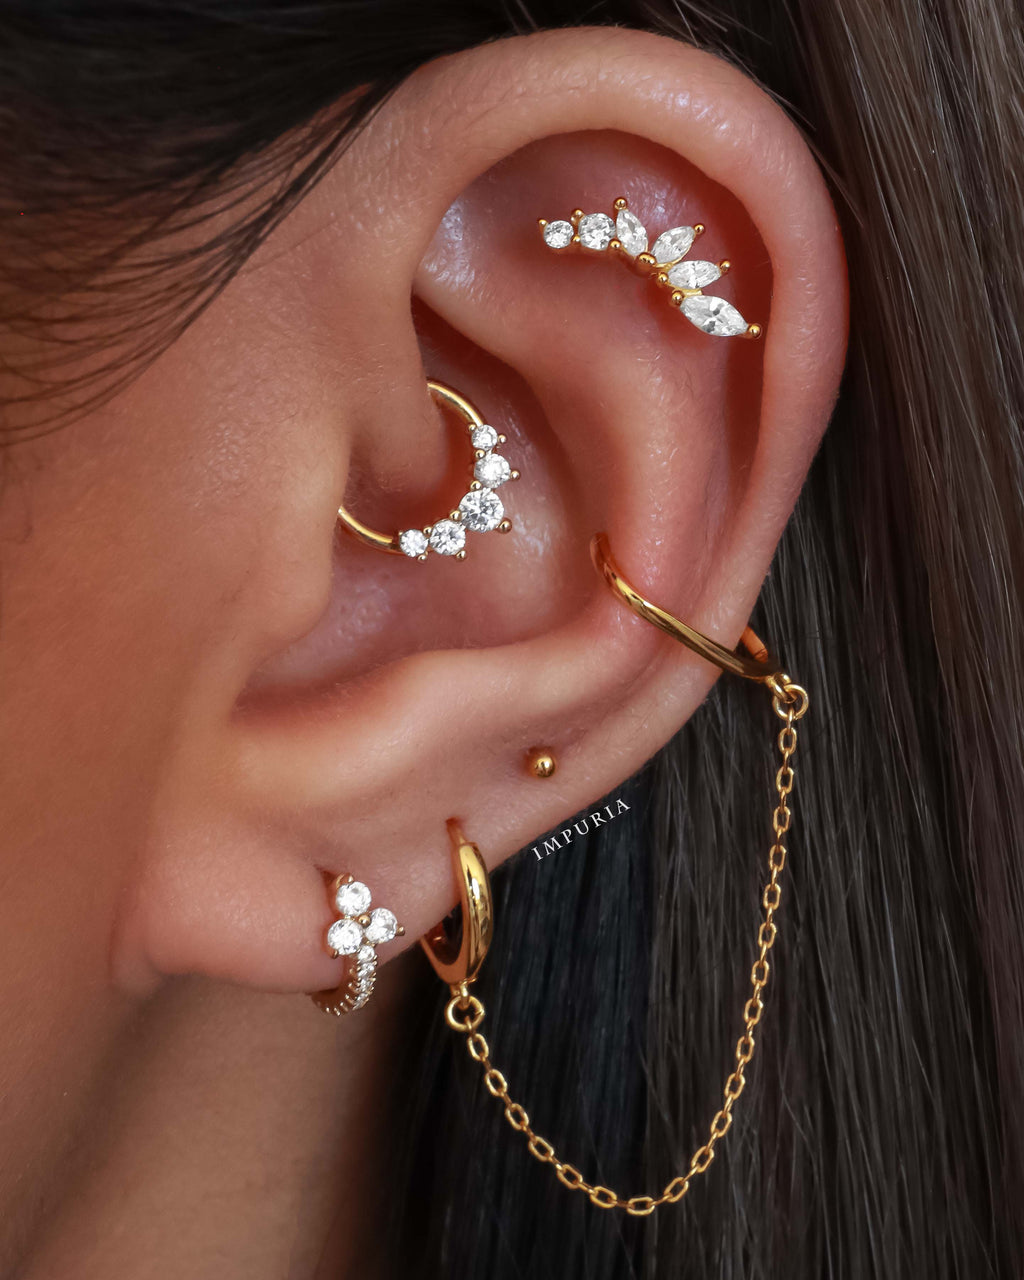 Crystal Daith Ear Piercing Jewelry Earring Cartilage Hoop Ring 16G ...